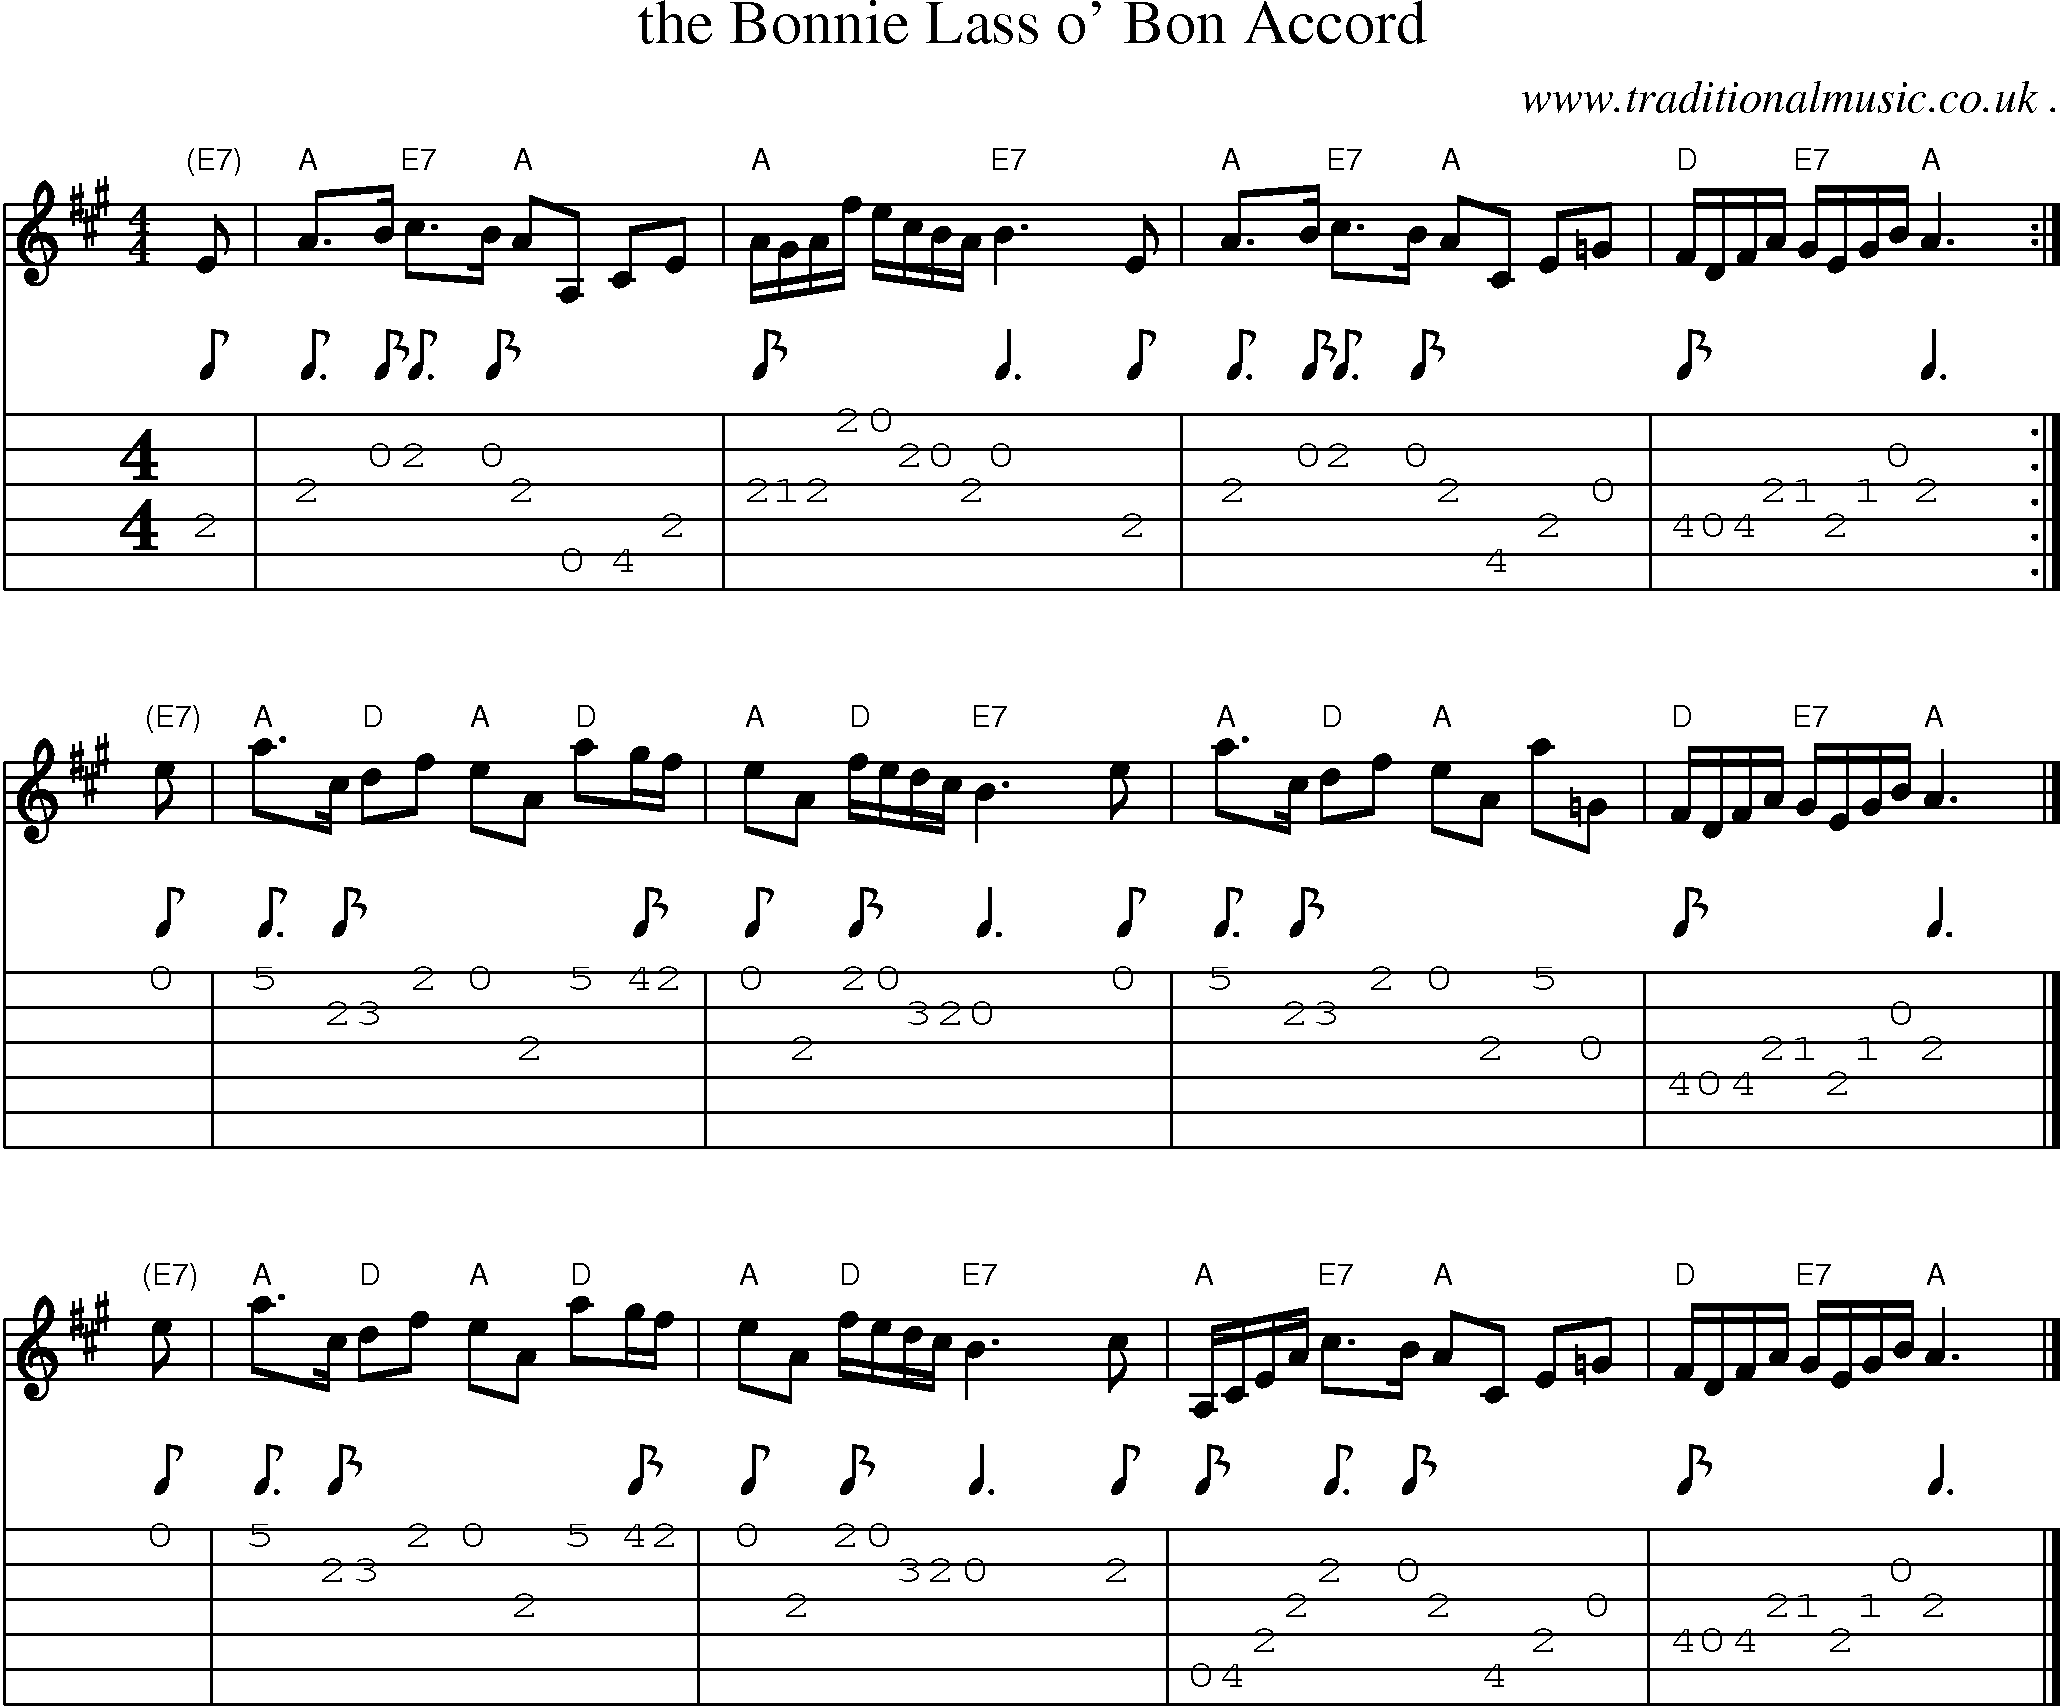 Sheet-music  score, Chords and Guitar Tabs for The Bonnie Lass O Bon Accord